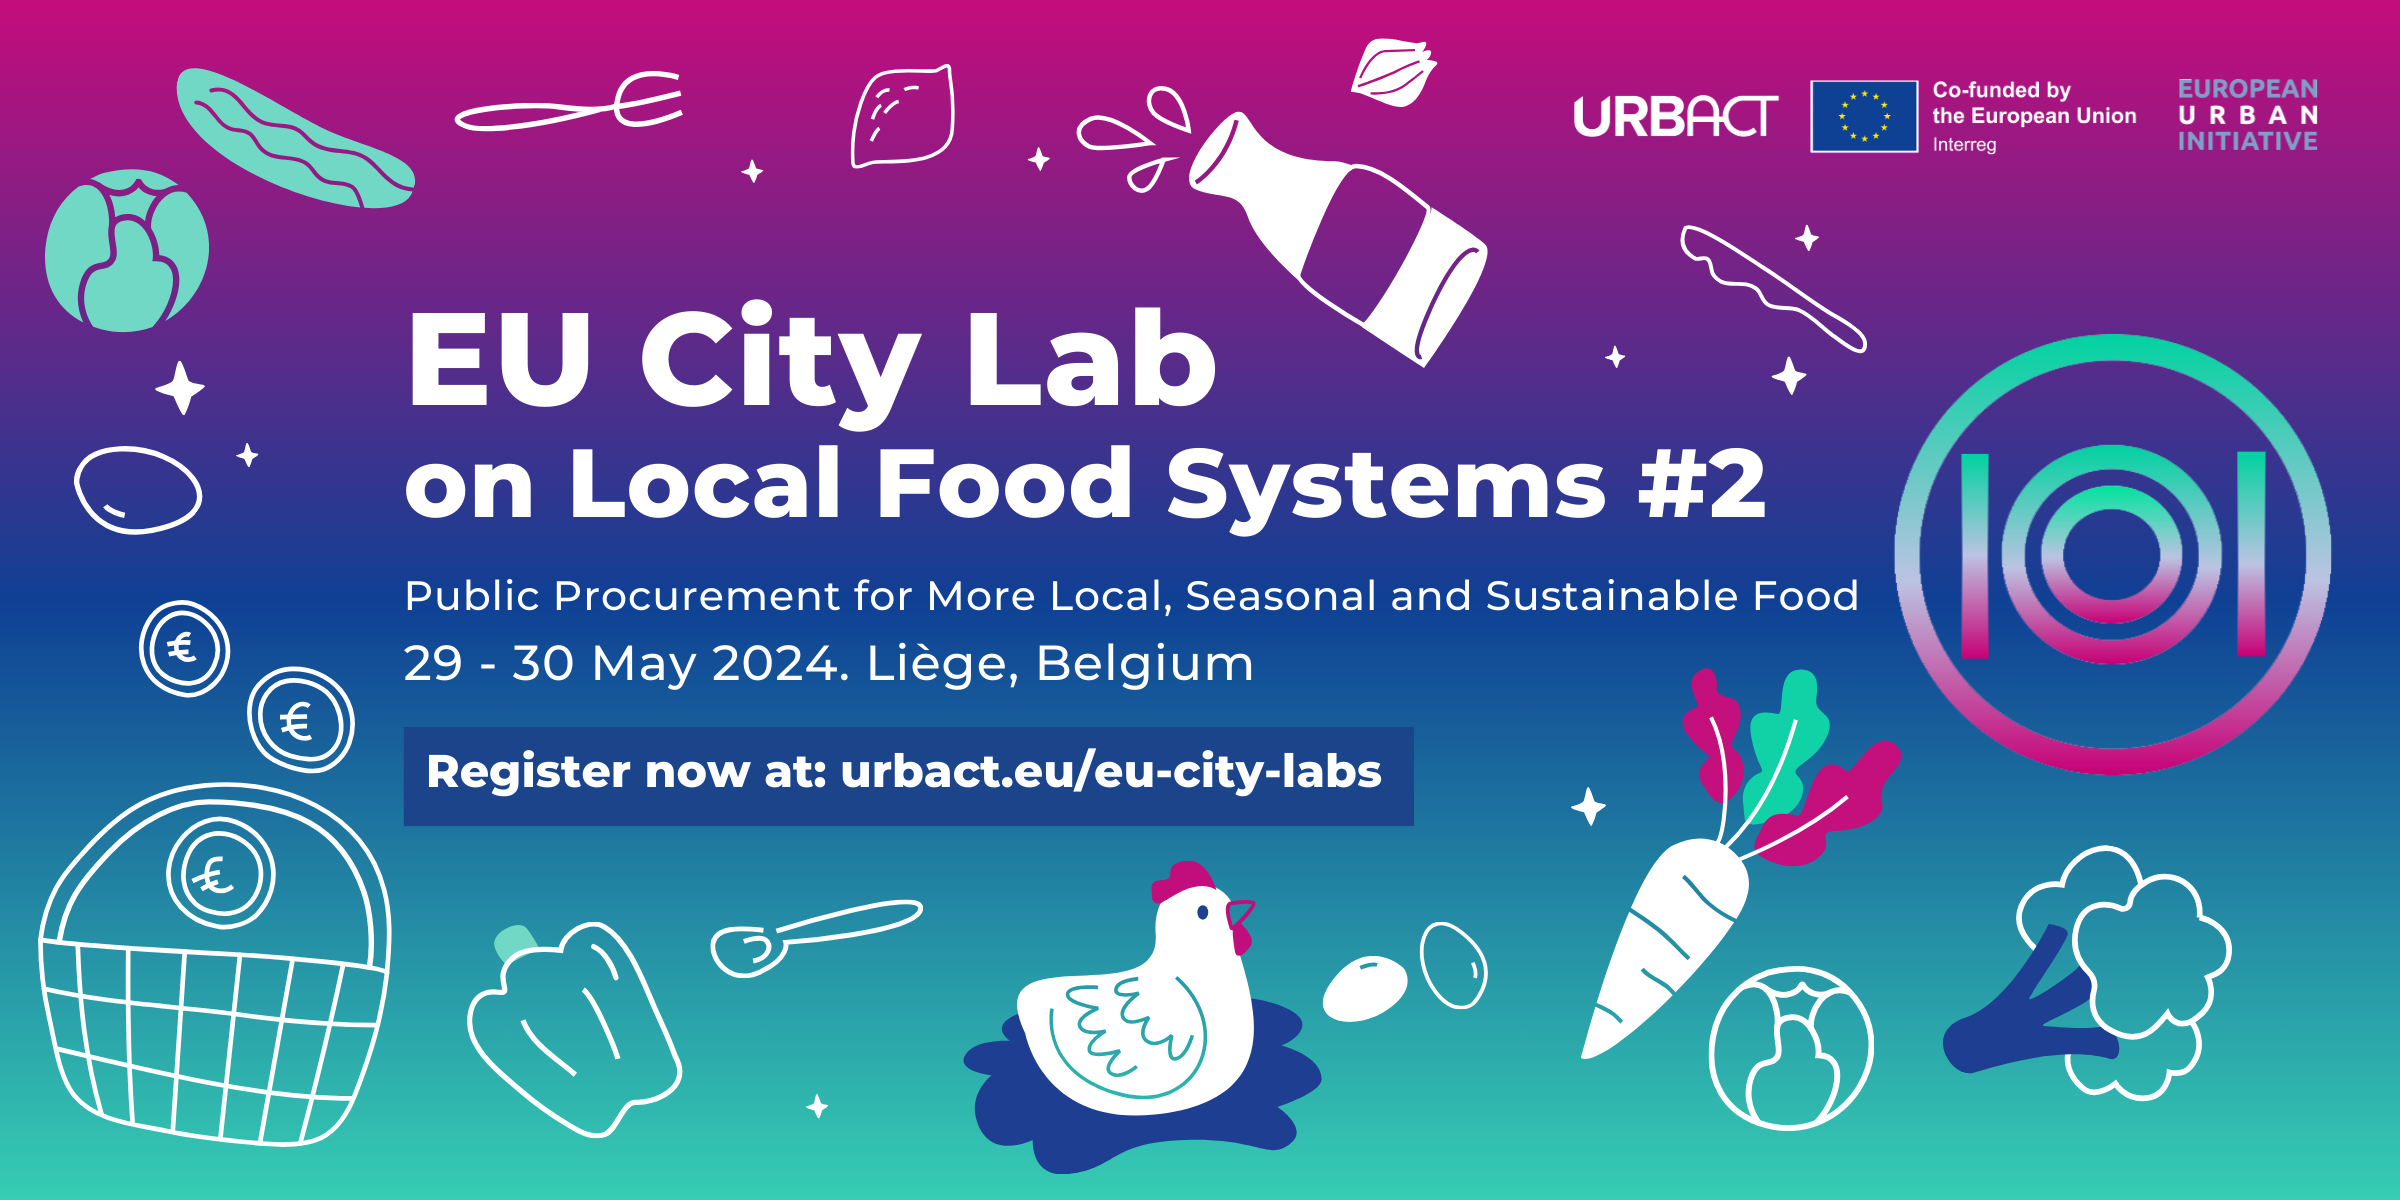 Eu City Lab on Local Food Systems #2